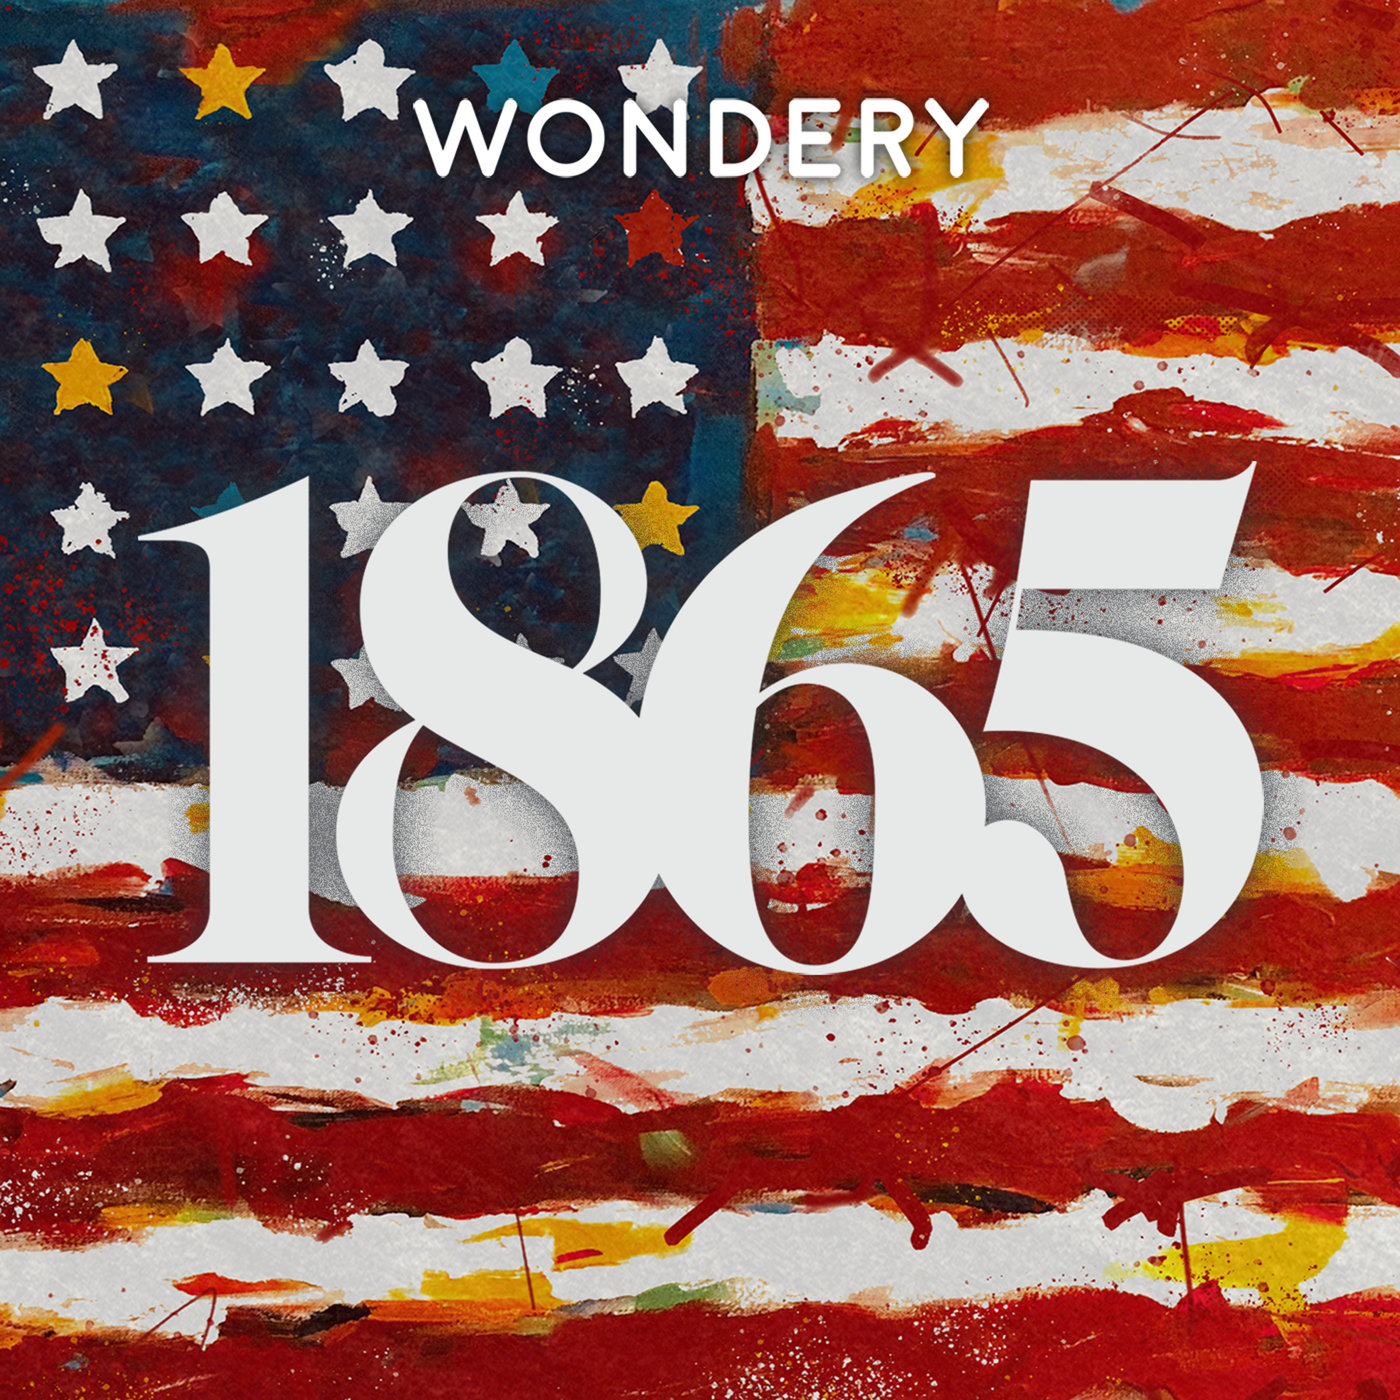 "1865" Podcast